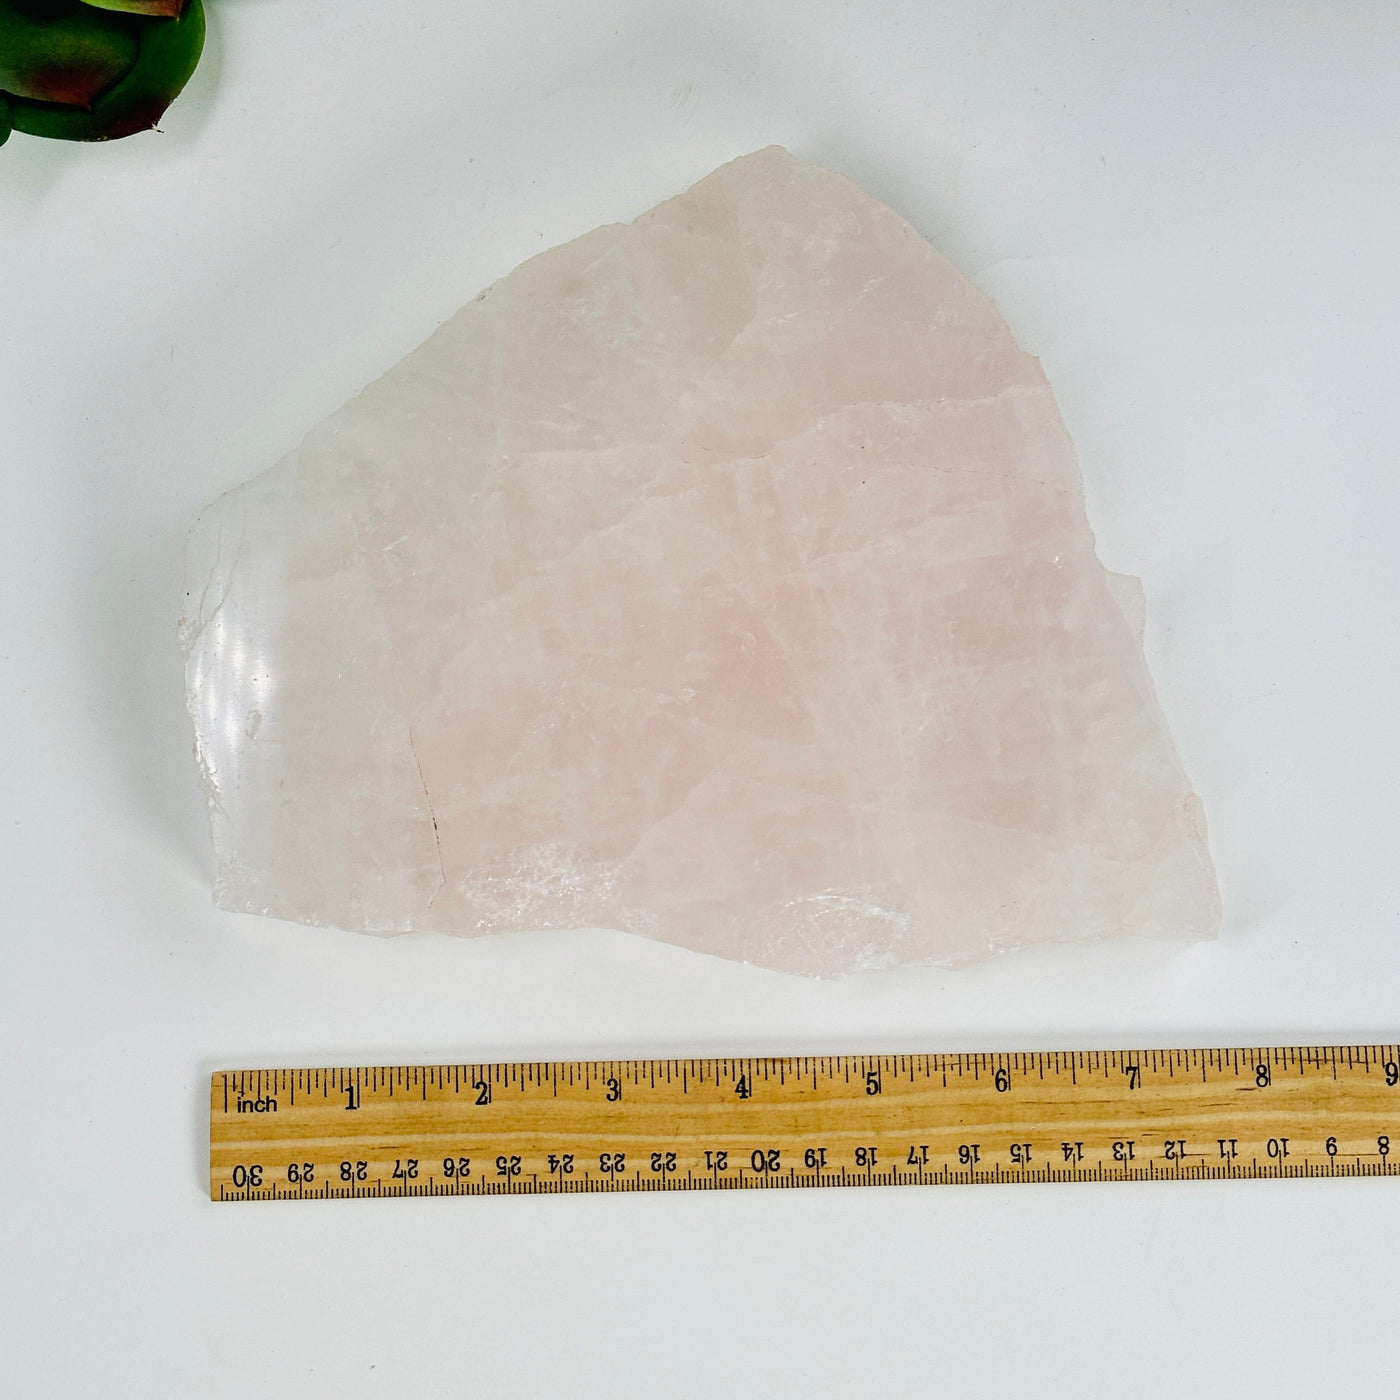 rose quartz slab next to a ruler for size reference